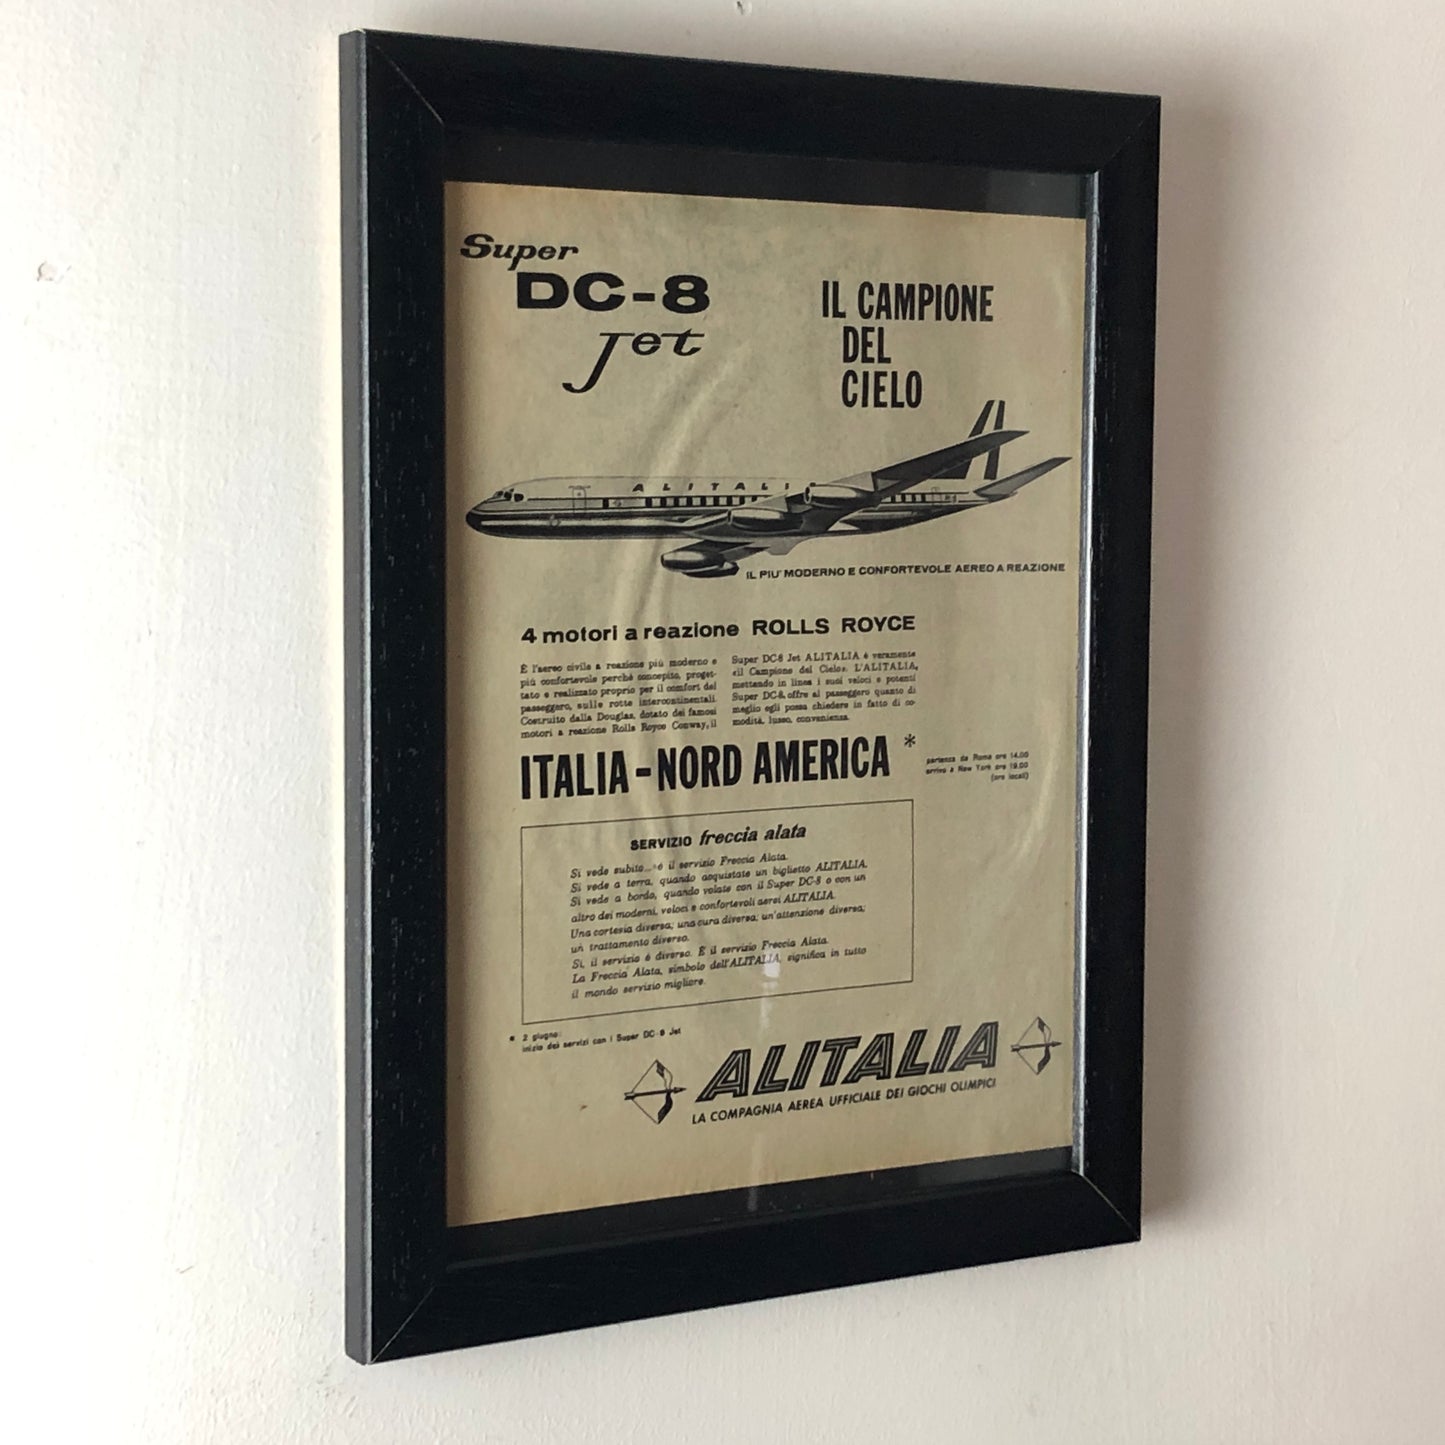 Alitalia, 1960 Advertising Alitalia Super DC-8 Jet with Rolls-Royce Engines